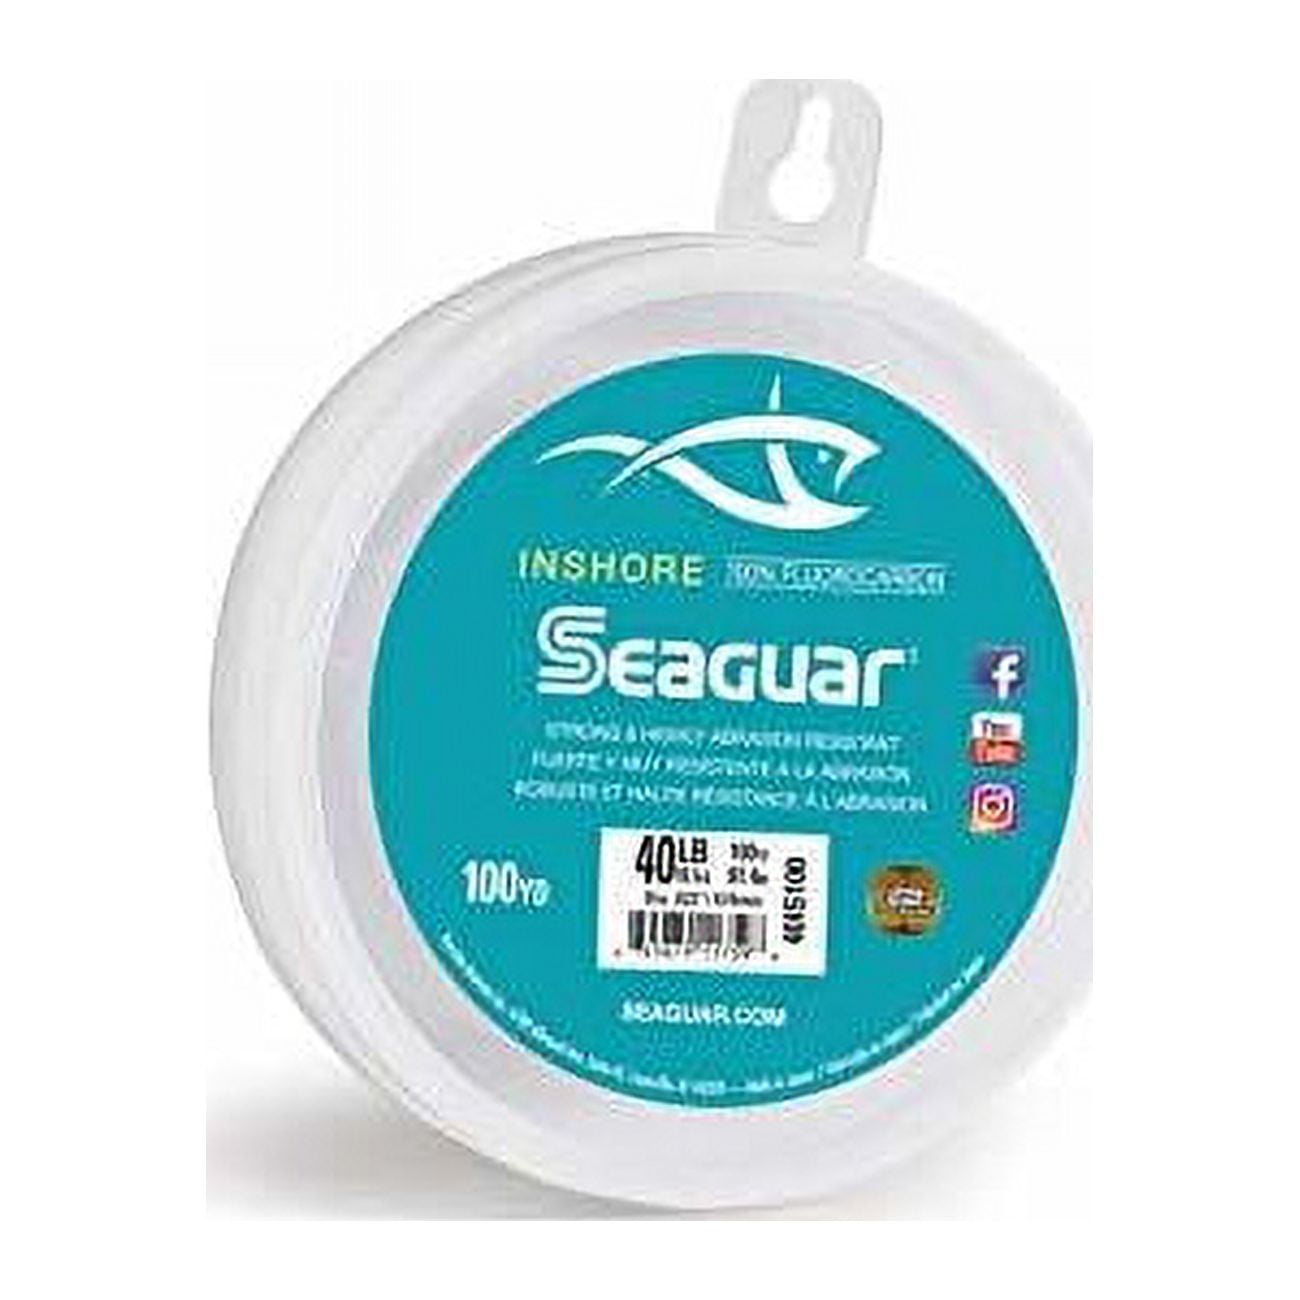 Seaguar InShore 100% Fluorocarbon Fishing Line 40lbs, 100yds Break  Strength/Length - 40IS100